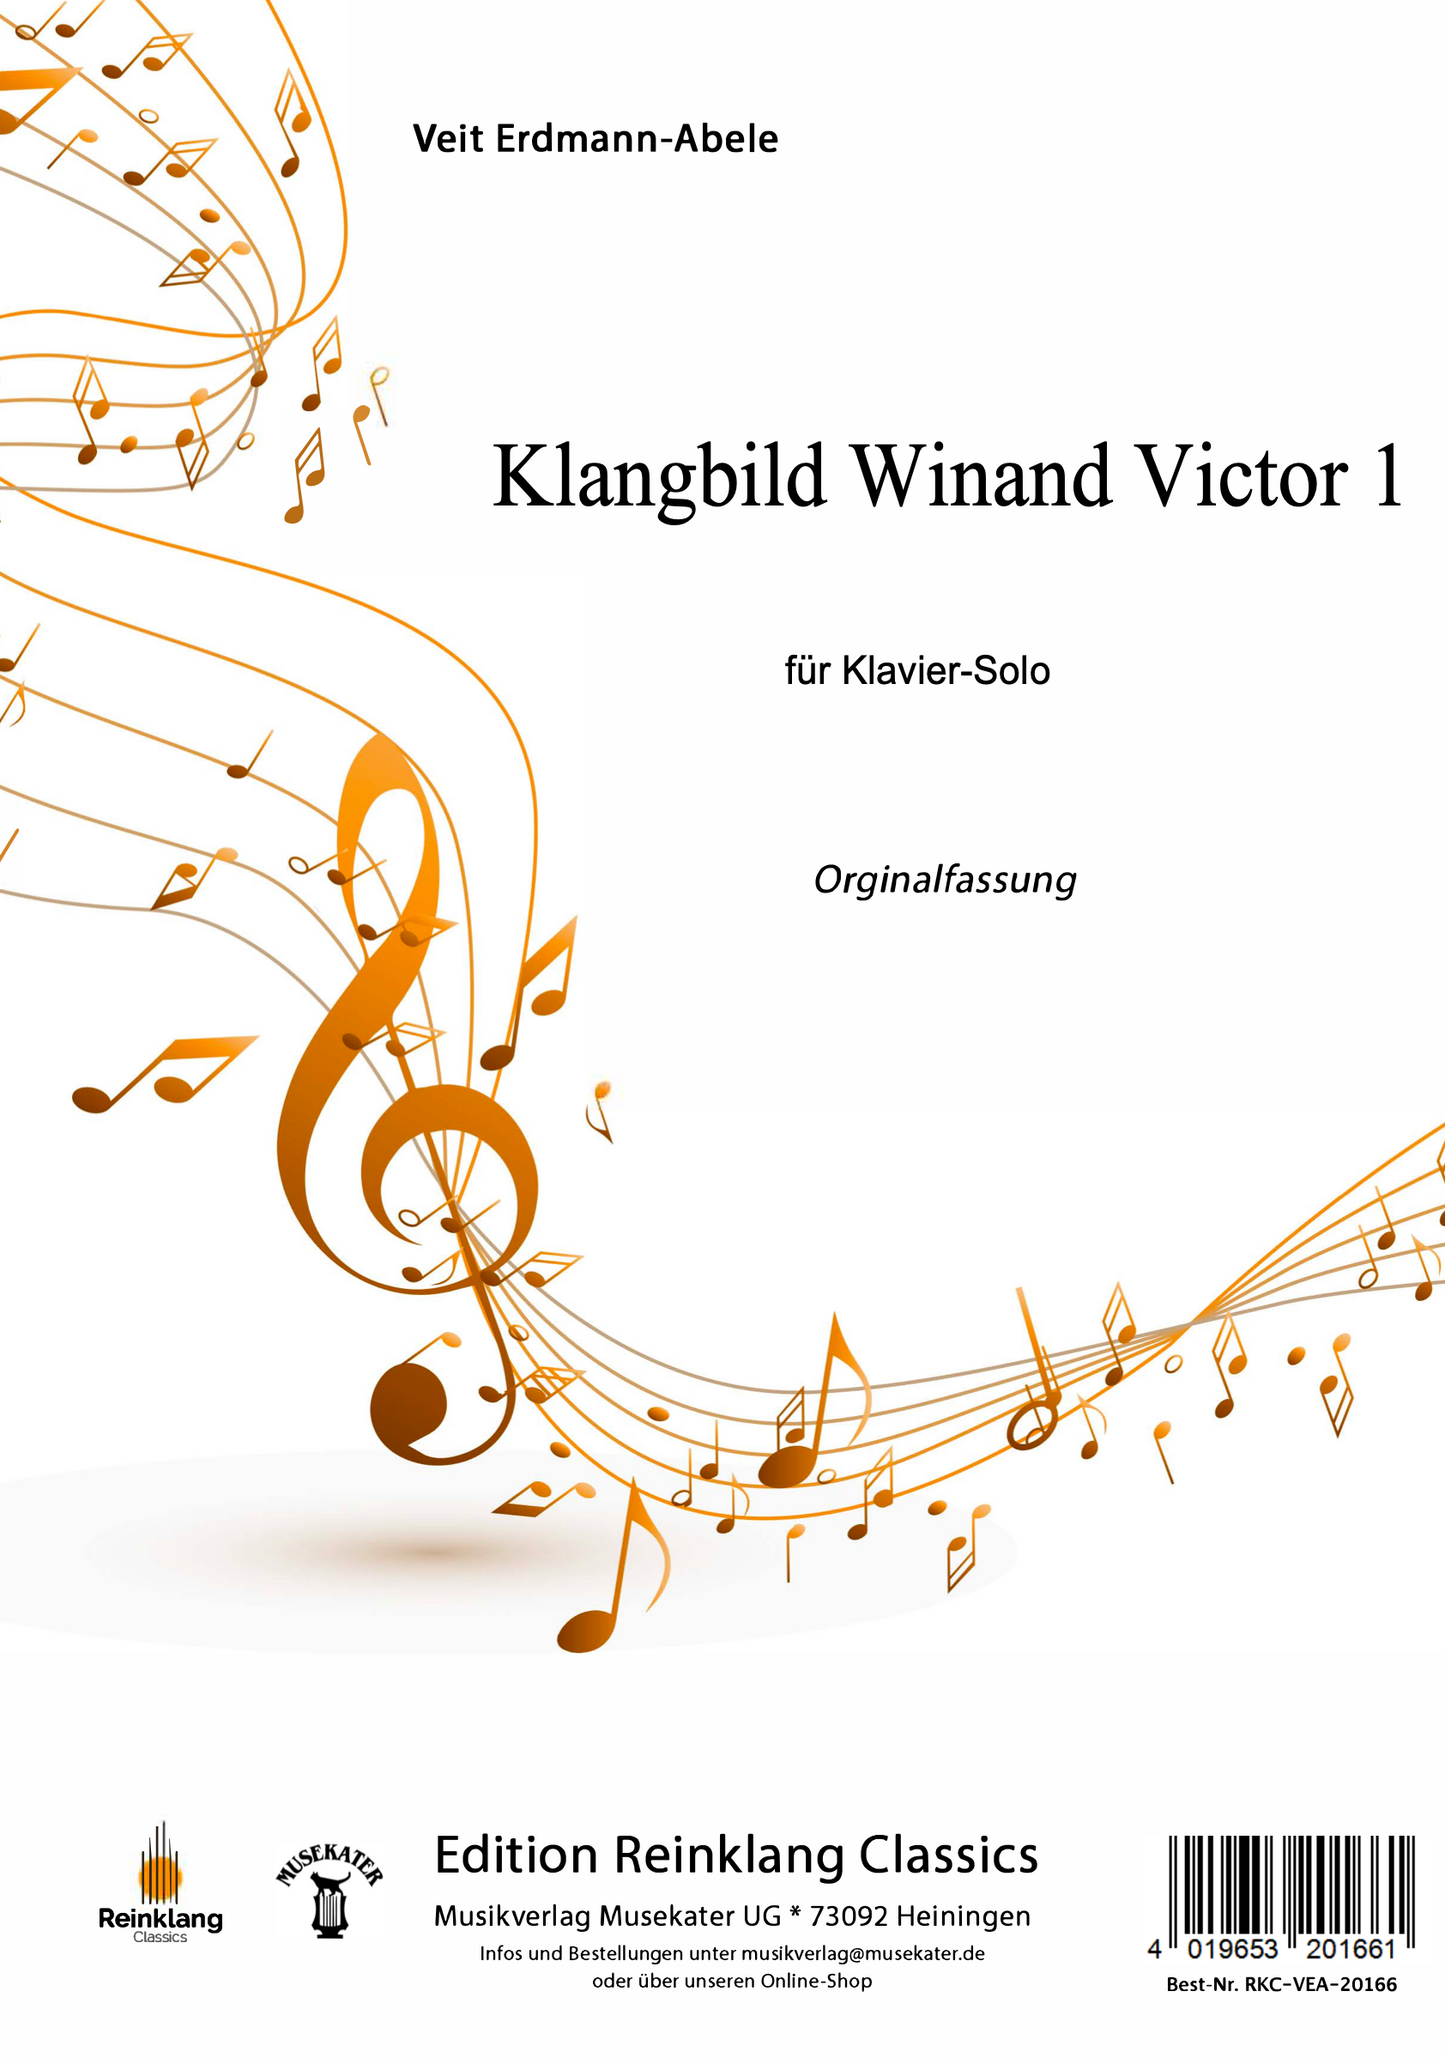 Klangbild Winand Victor 1